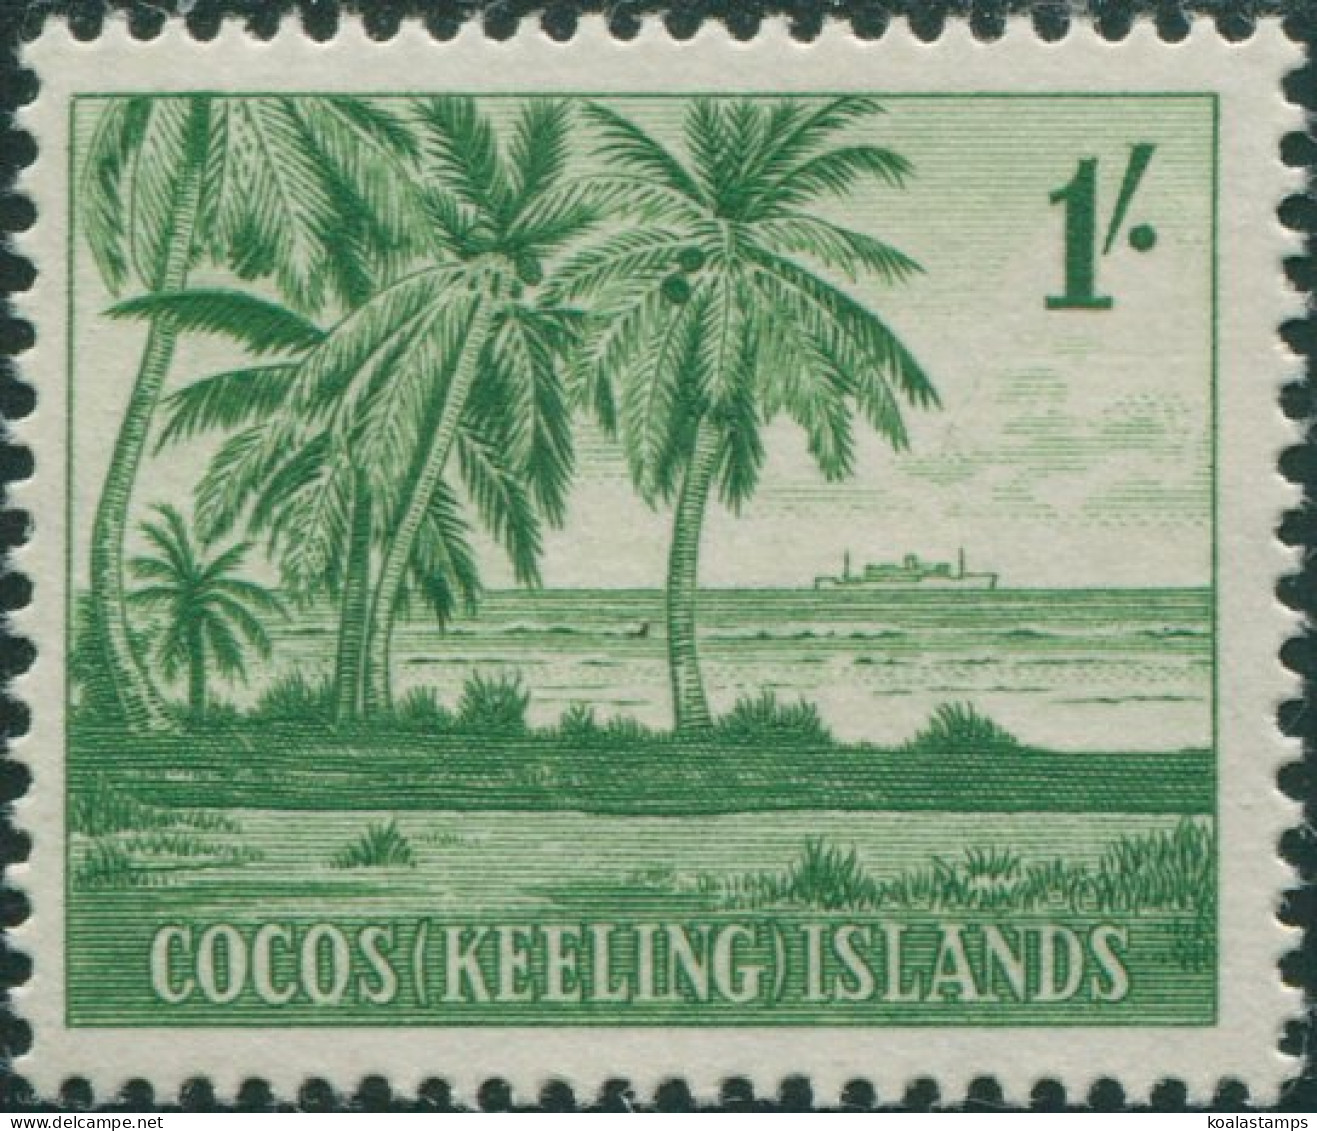 Cocos Islands 1963 SG4 1/- Palms MLH - Kokosinseln (Keeling Islands)